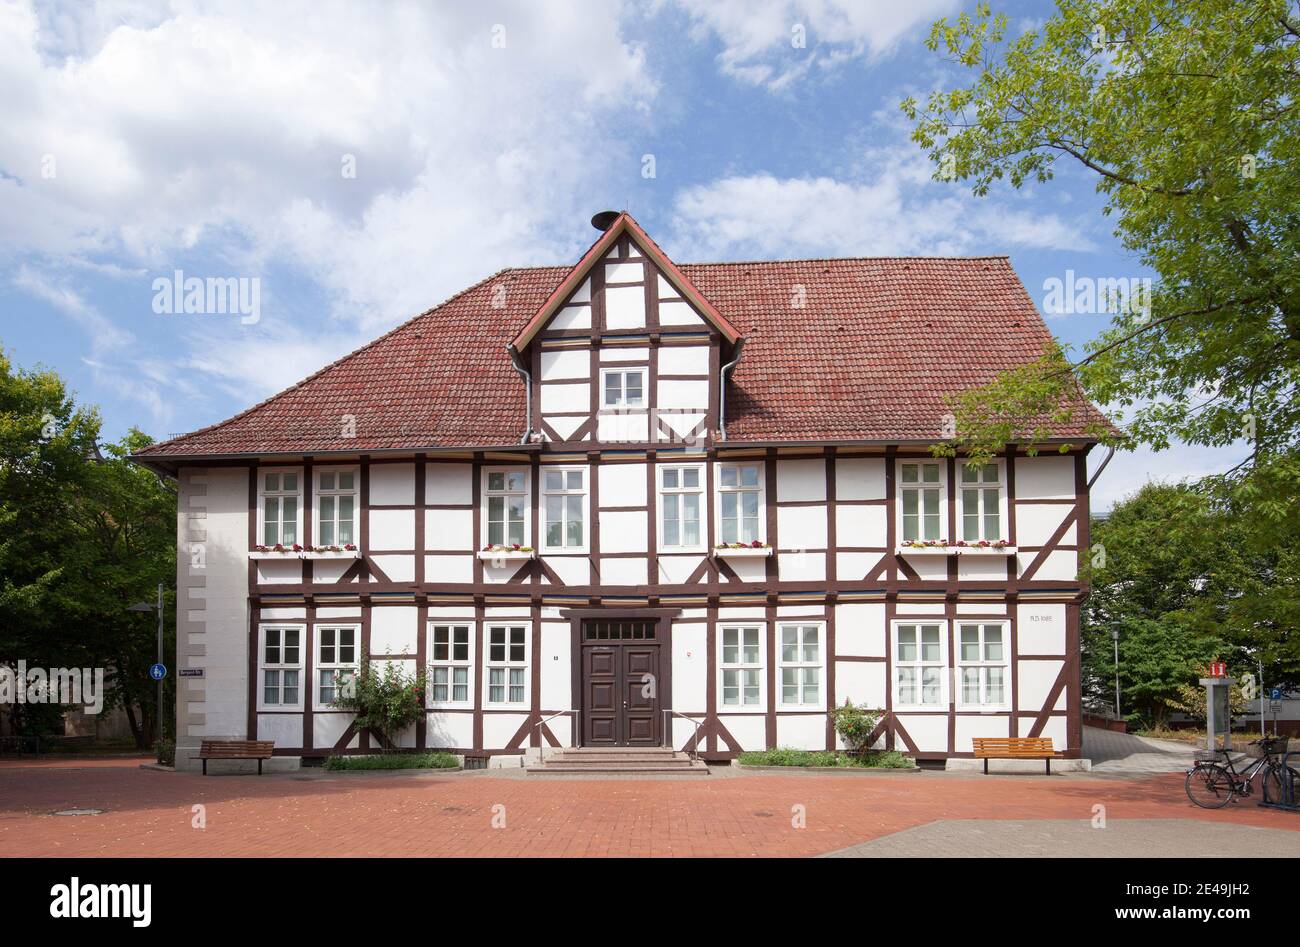 Town hall, Barsinghausen, Hanover region Stock Photo - Alamy